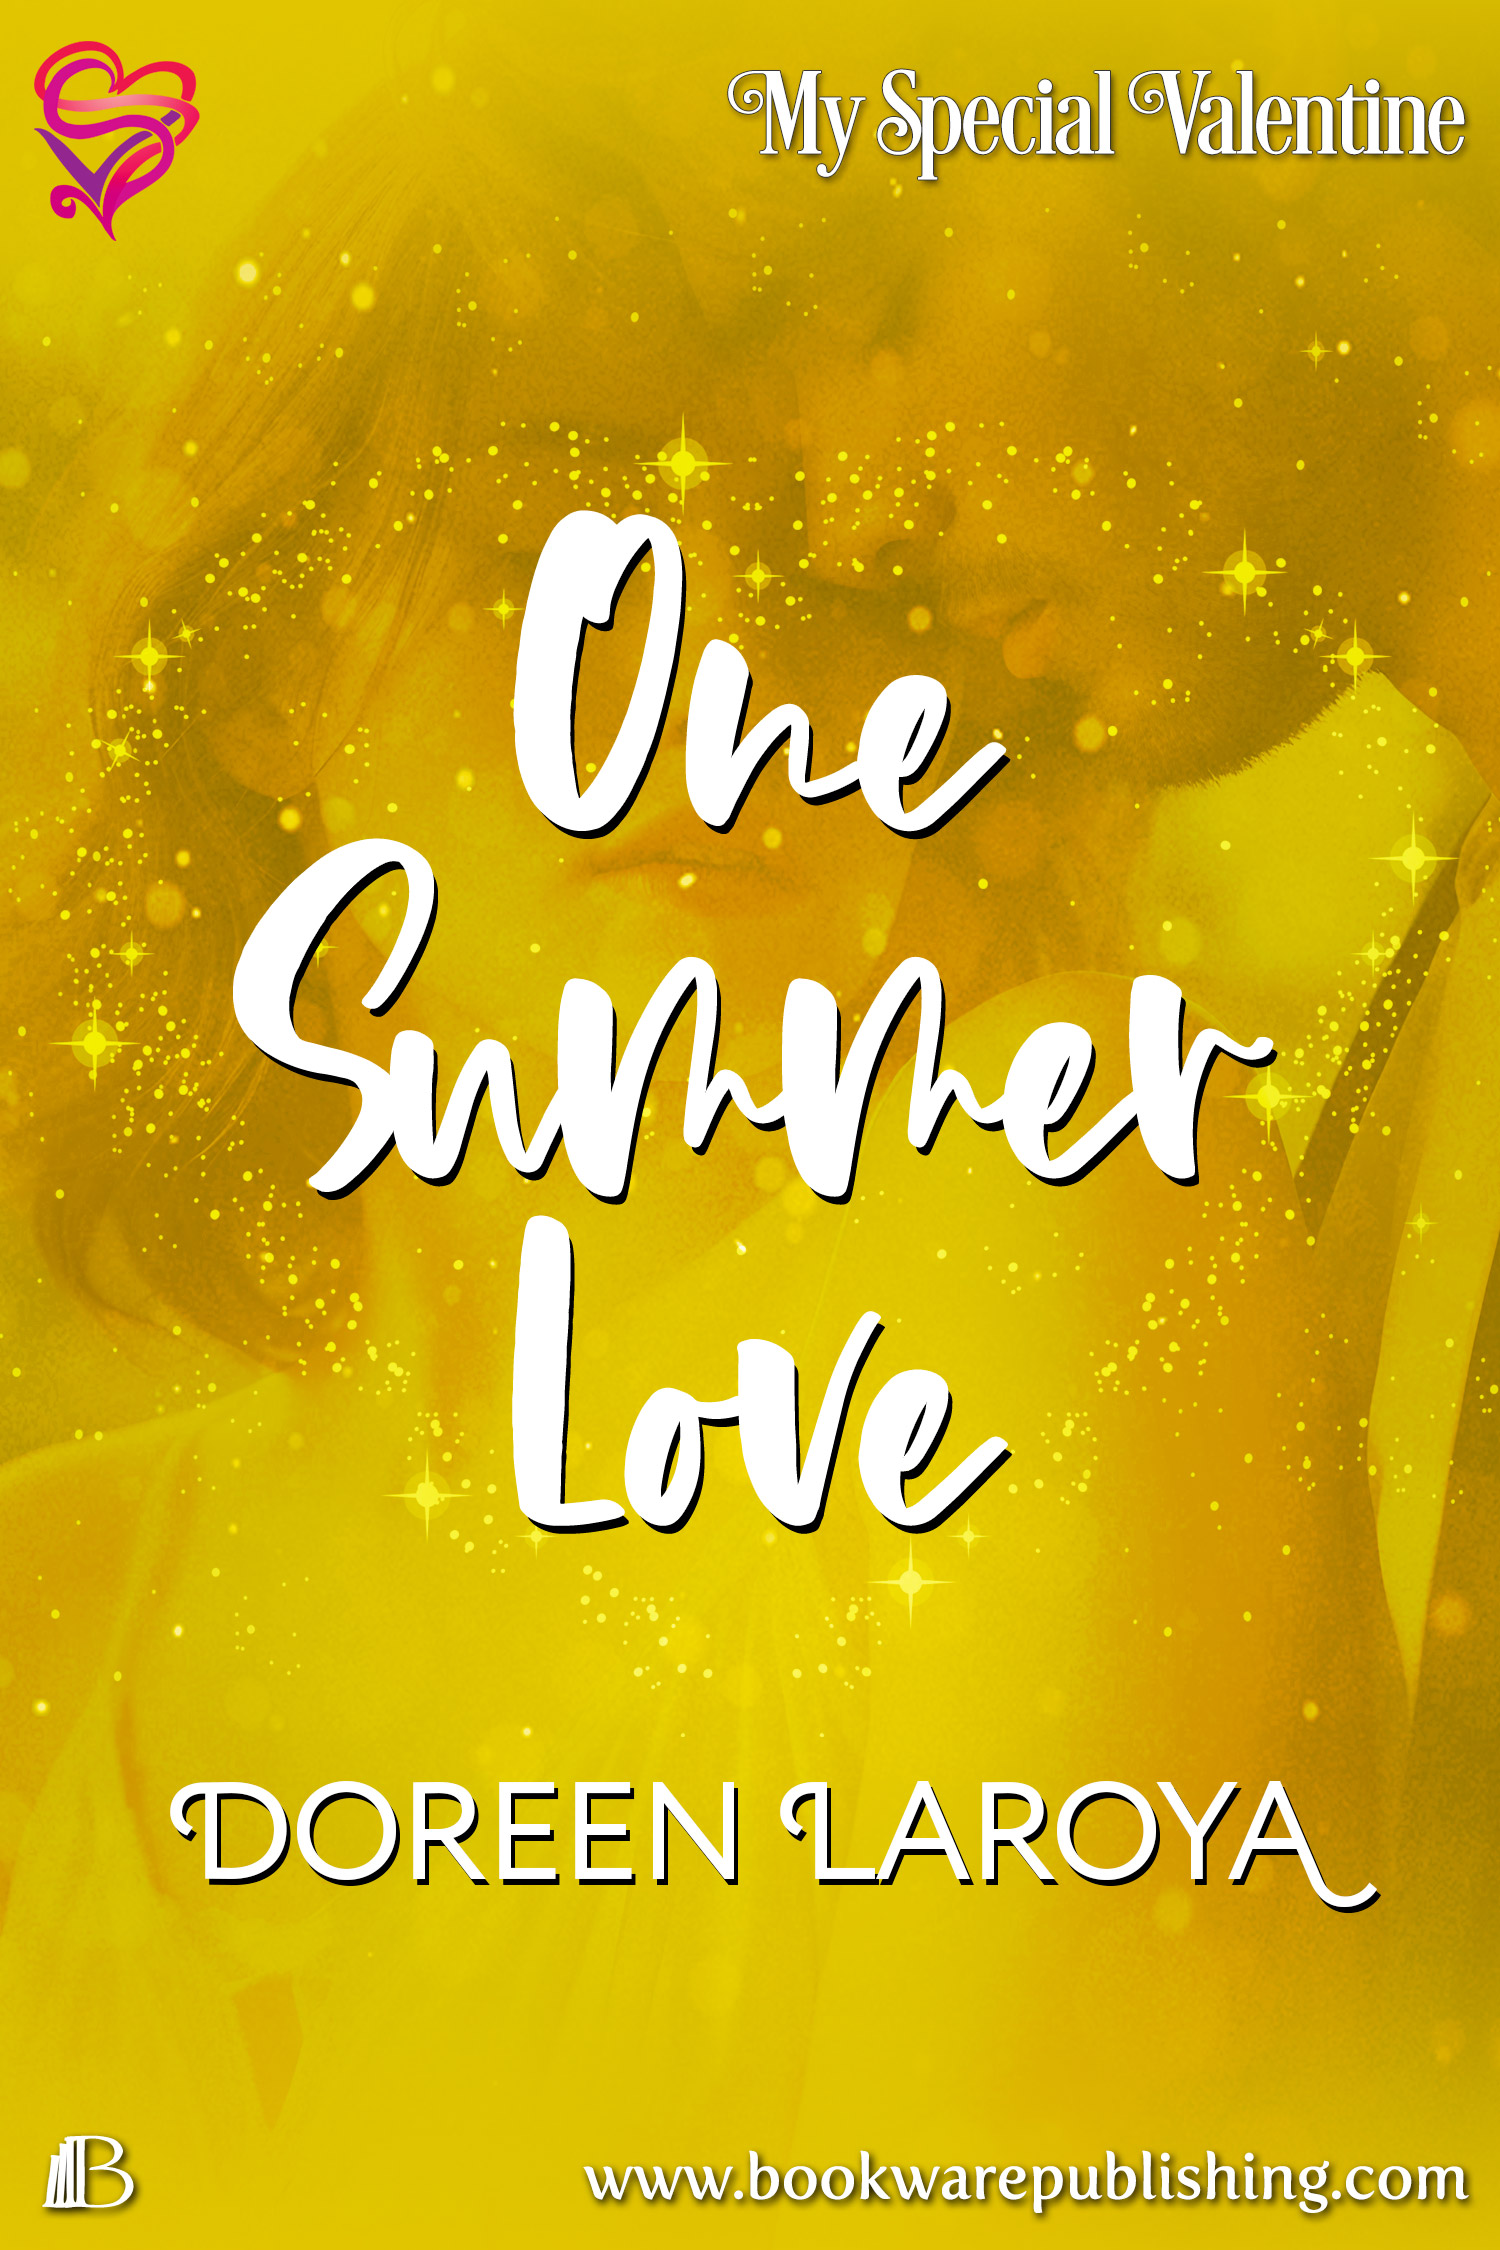 One Summer Love